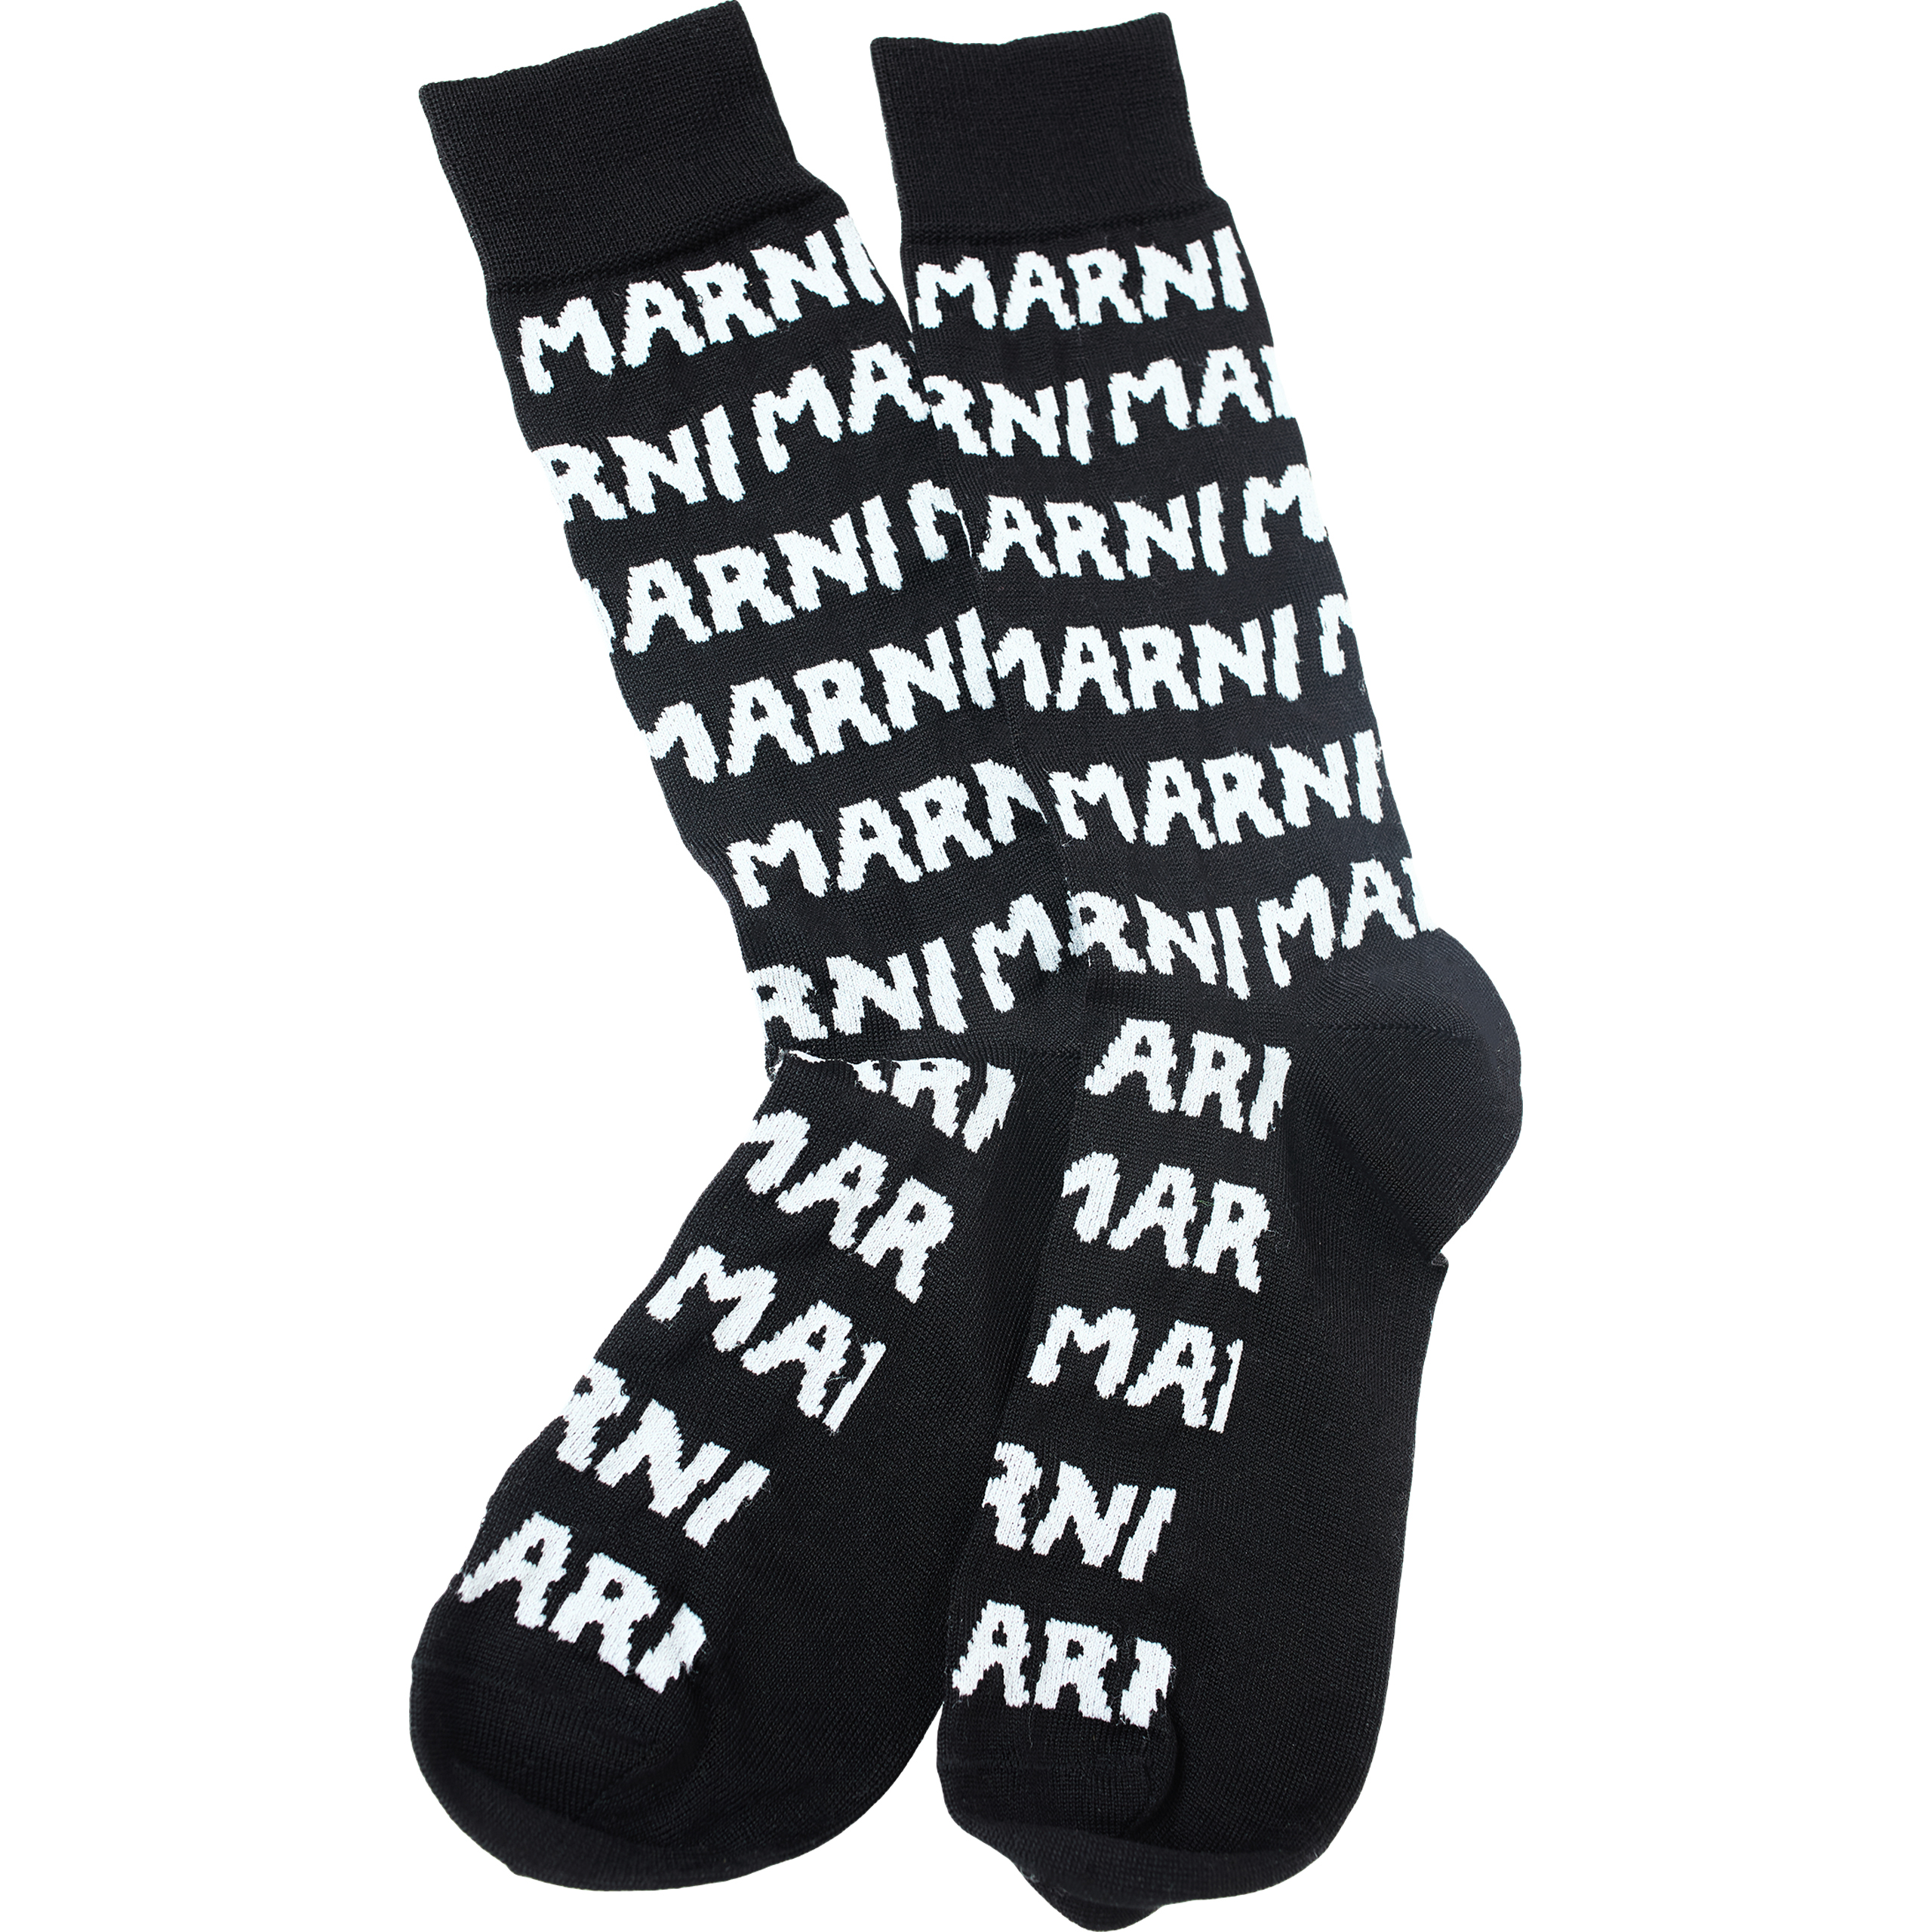 Marni Black Logo Socks